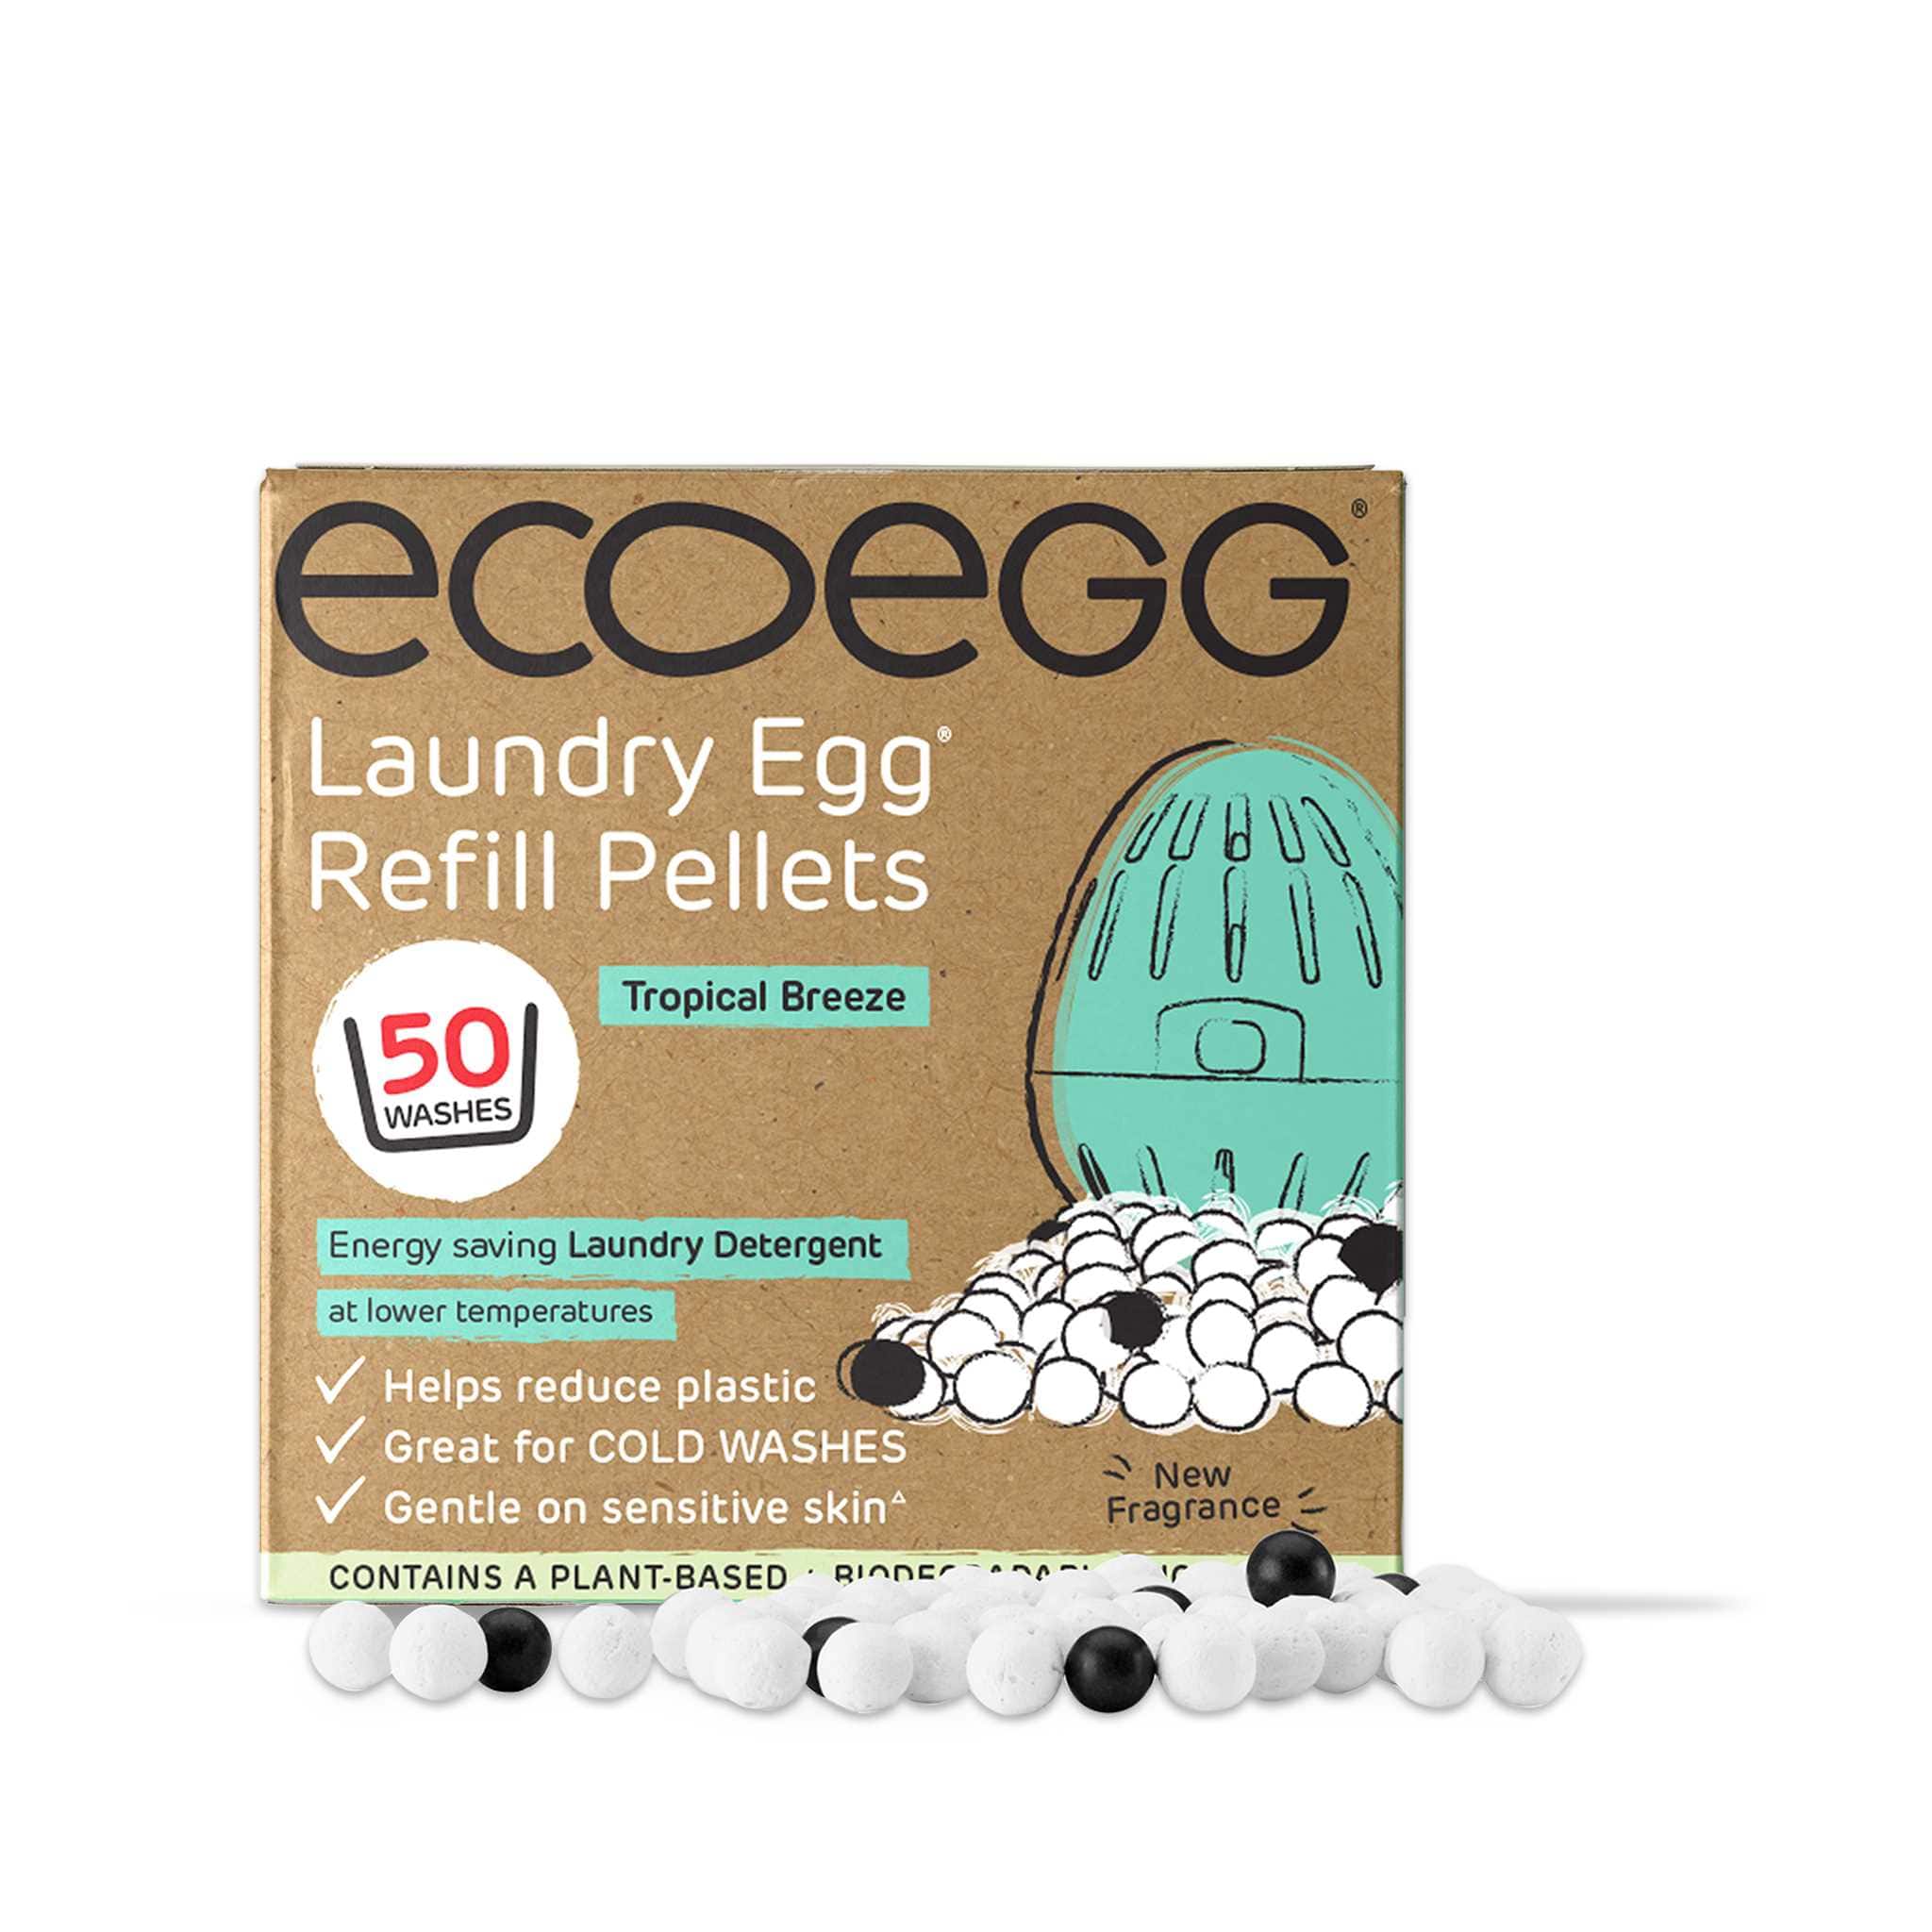 Ecoegg Laundry Egg Refill Pellets 50 Washes